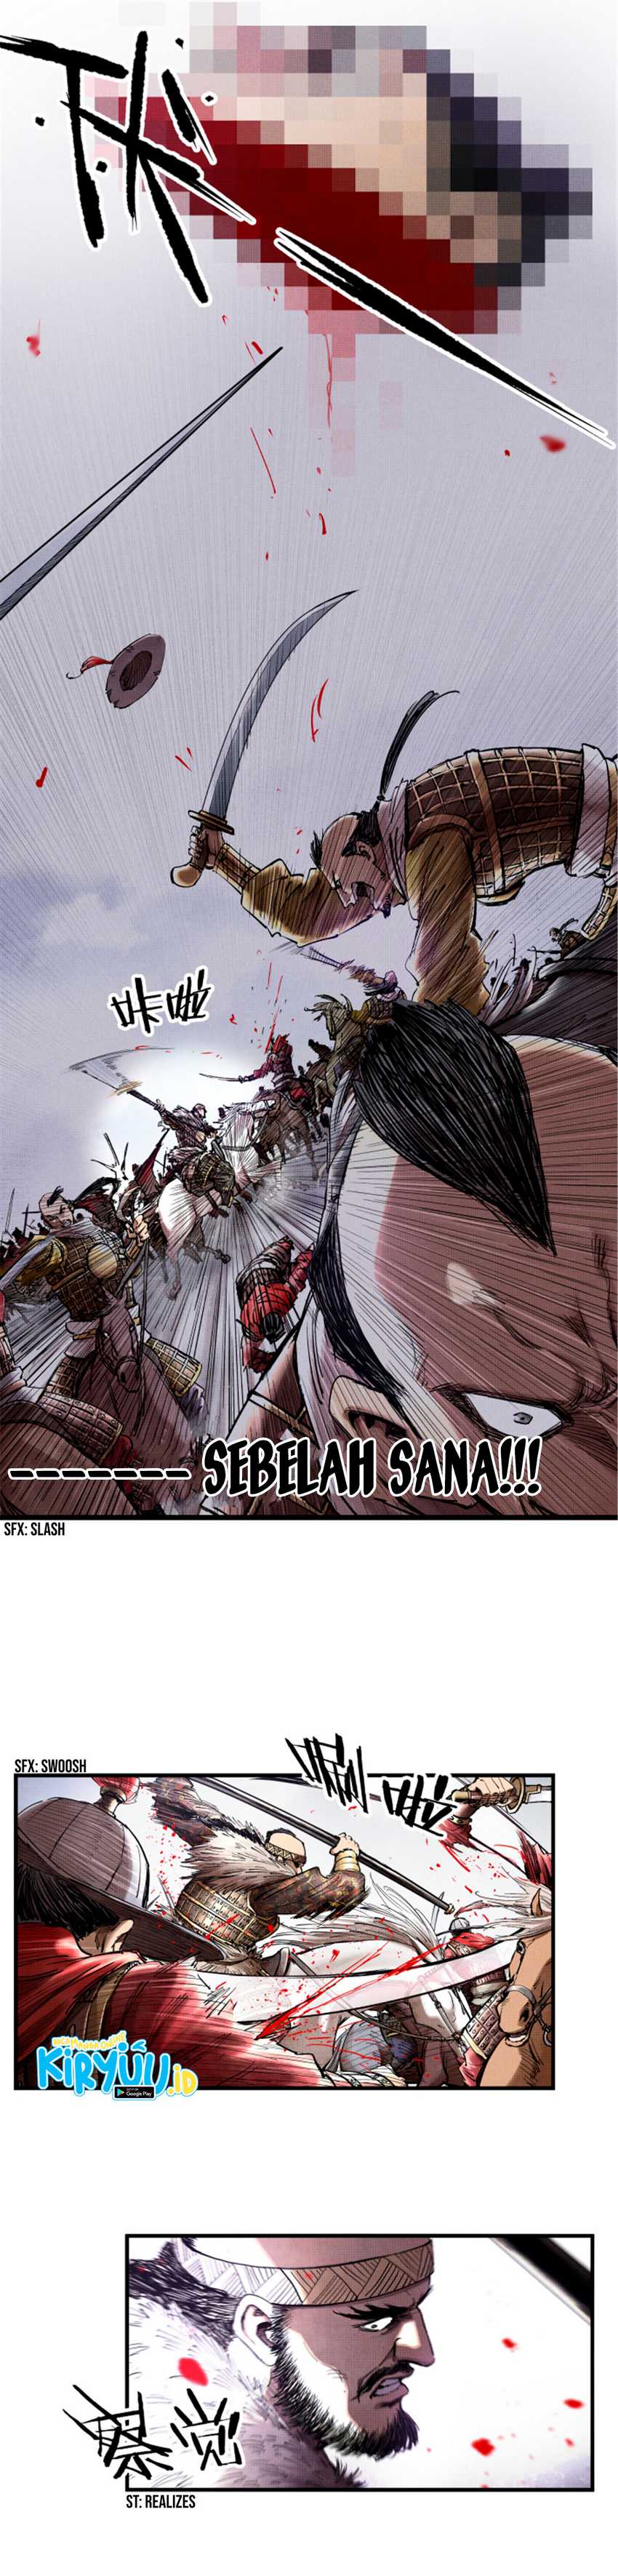 The Elusive Samurai Chapter 17